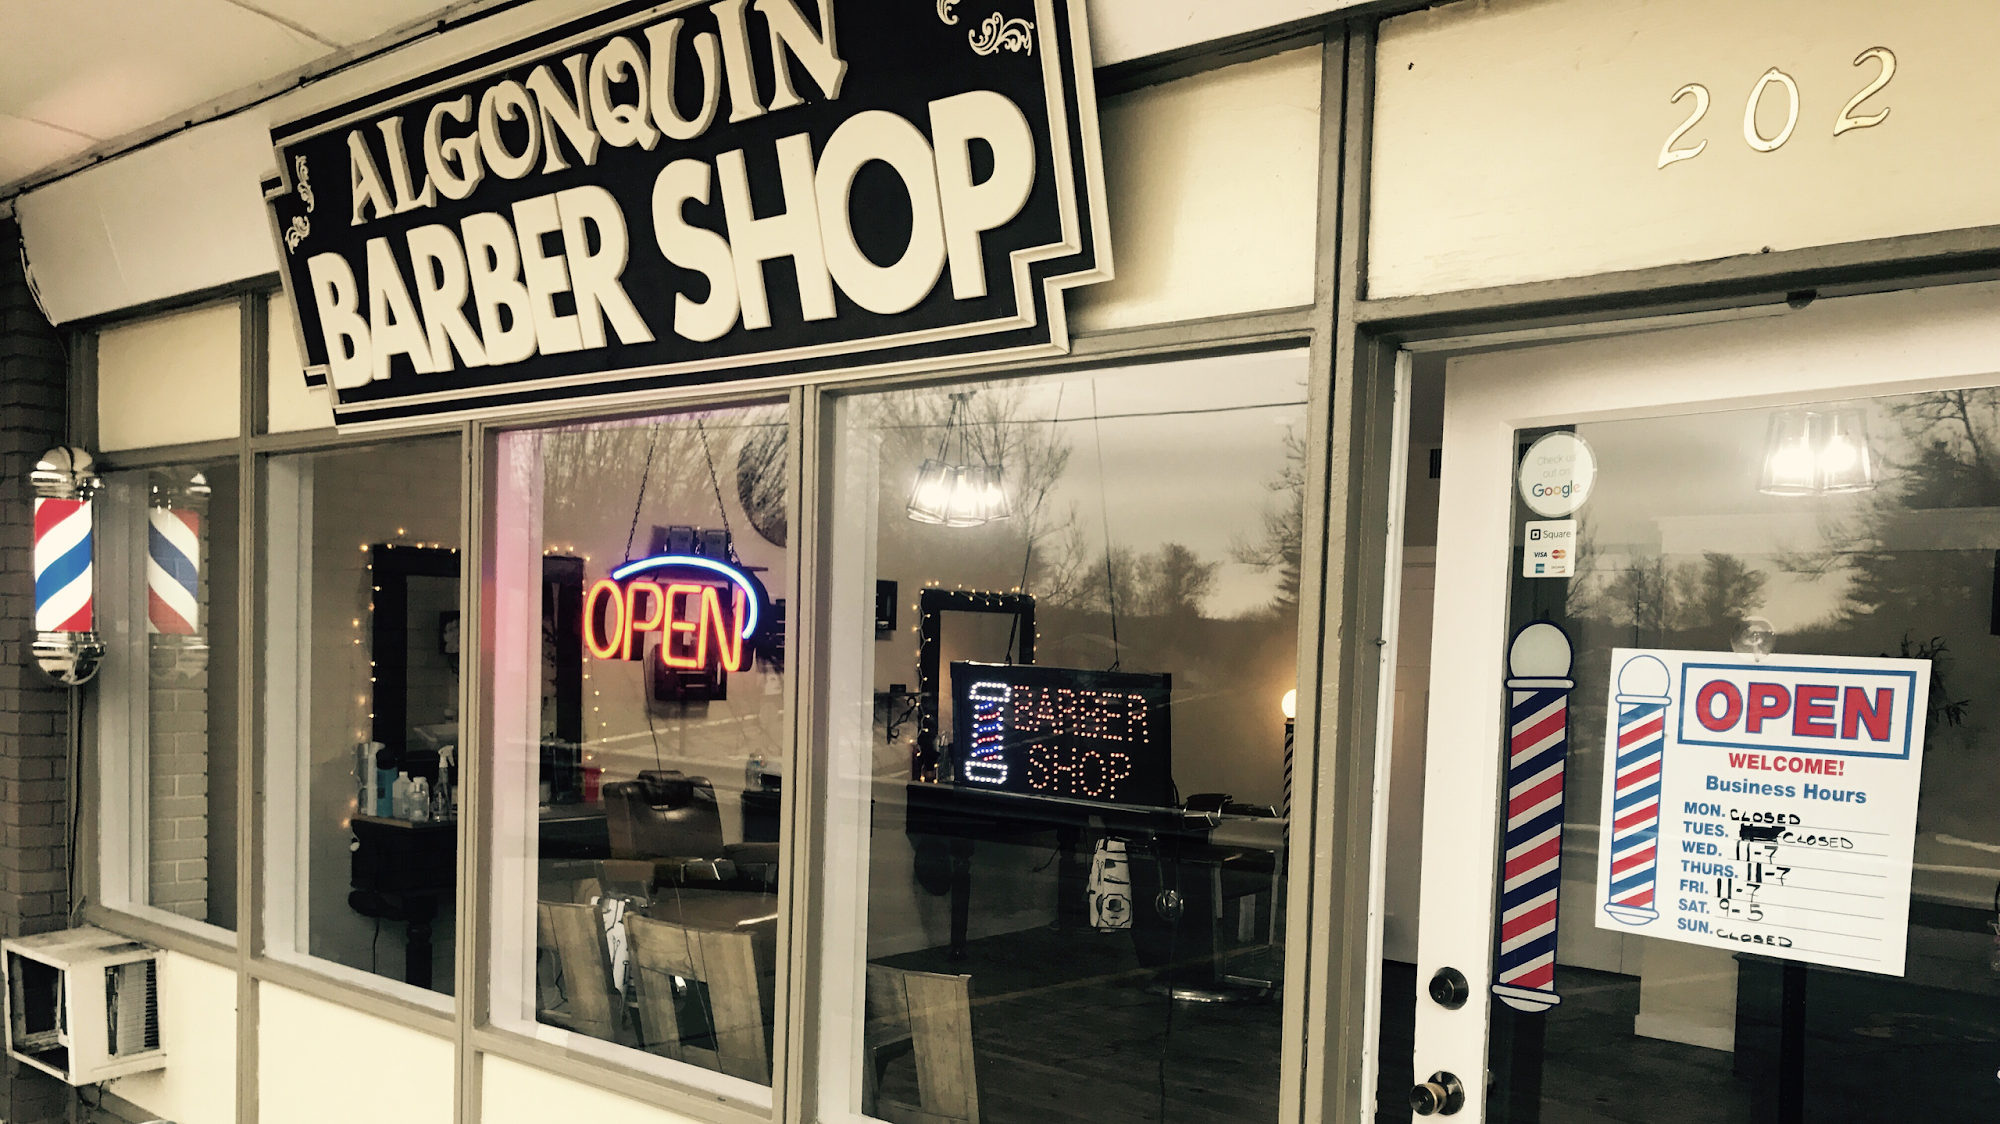 Algonquin Barber Shop